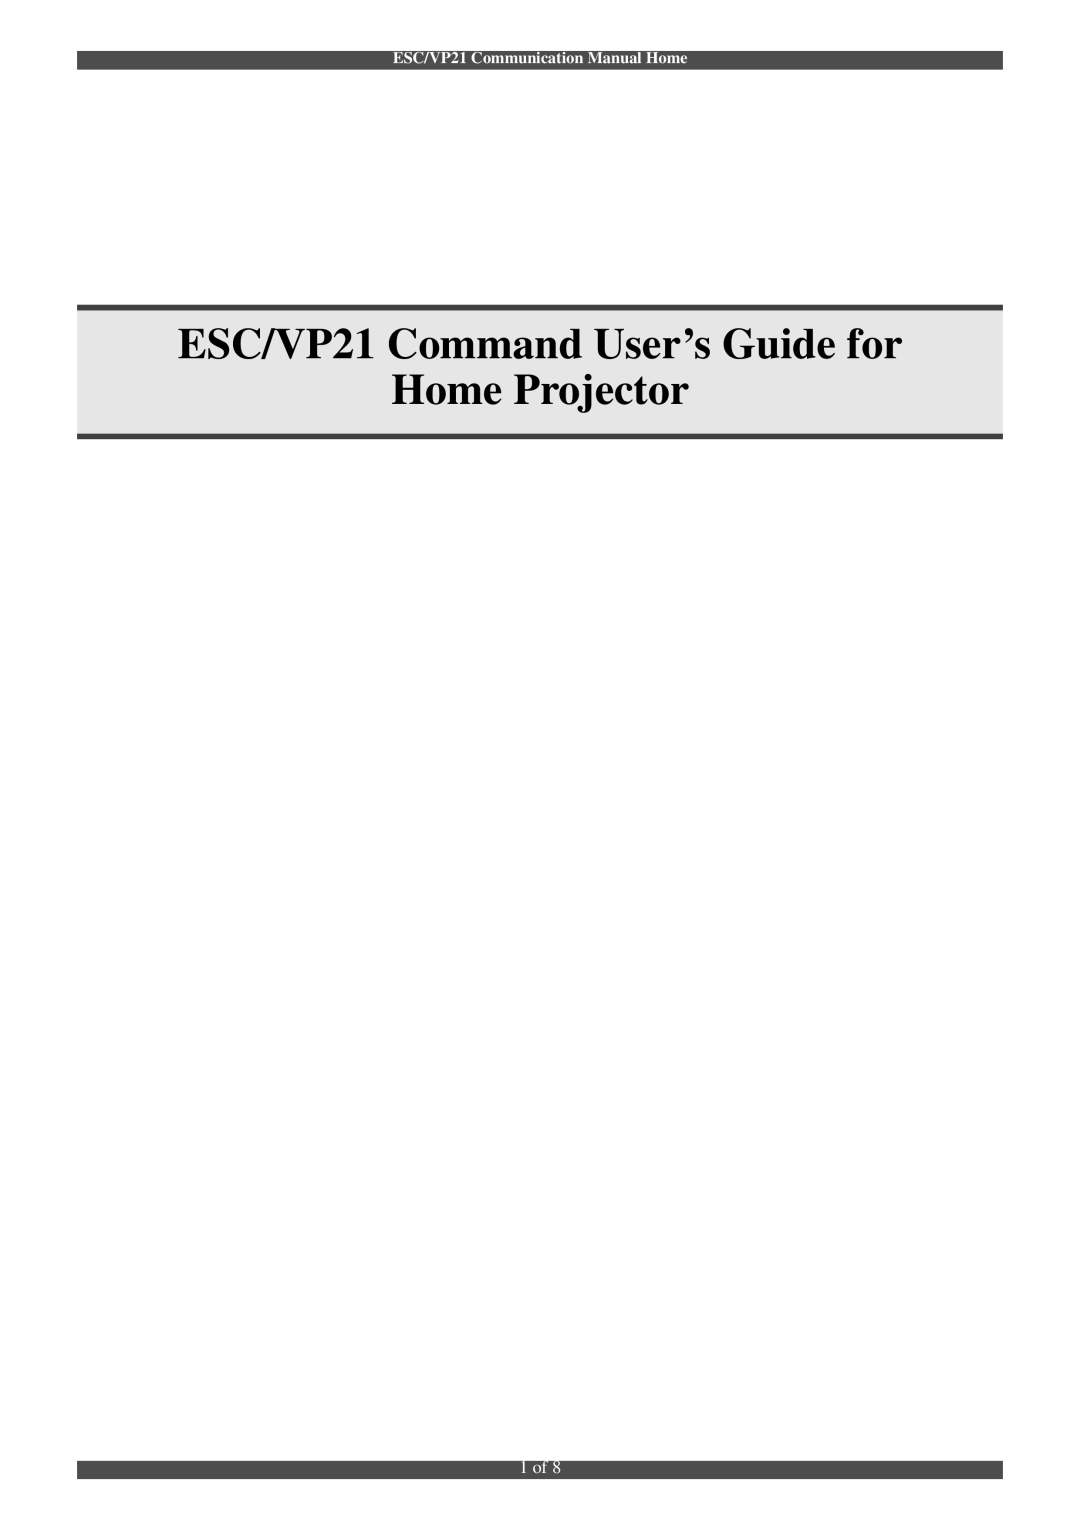 Epson manual 1 of, ESC/VP21 Command User’s Guide for Home Projector, ESC/VP21 Communication Manual Home 